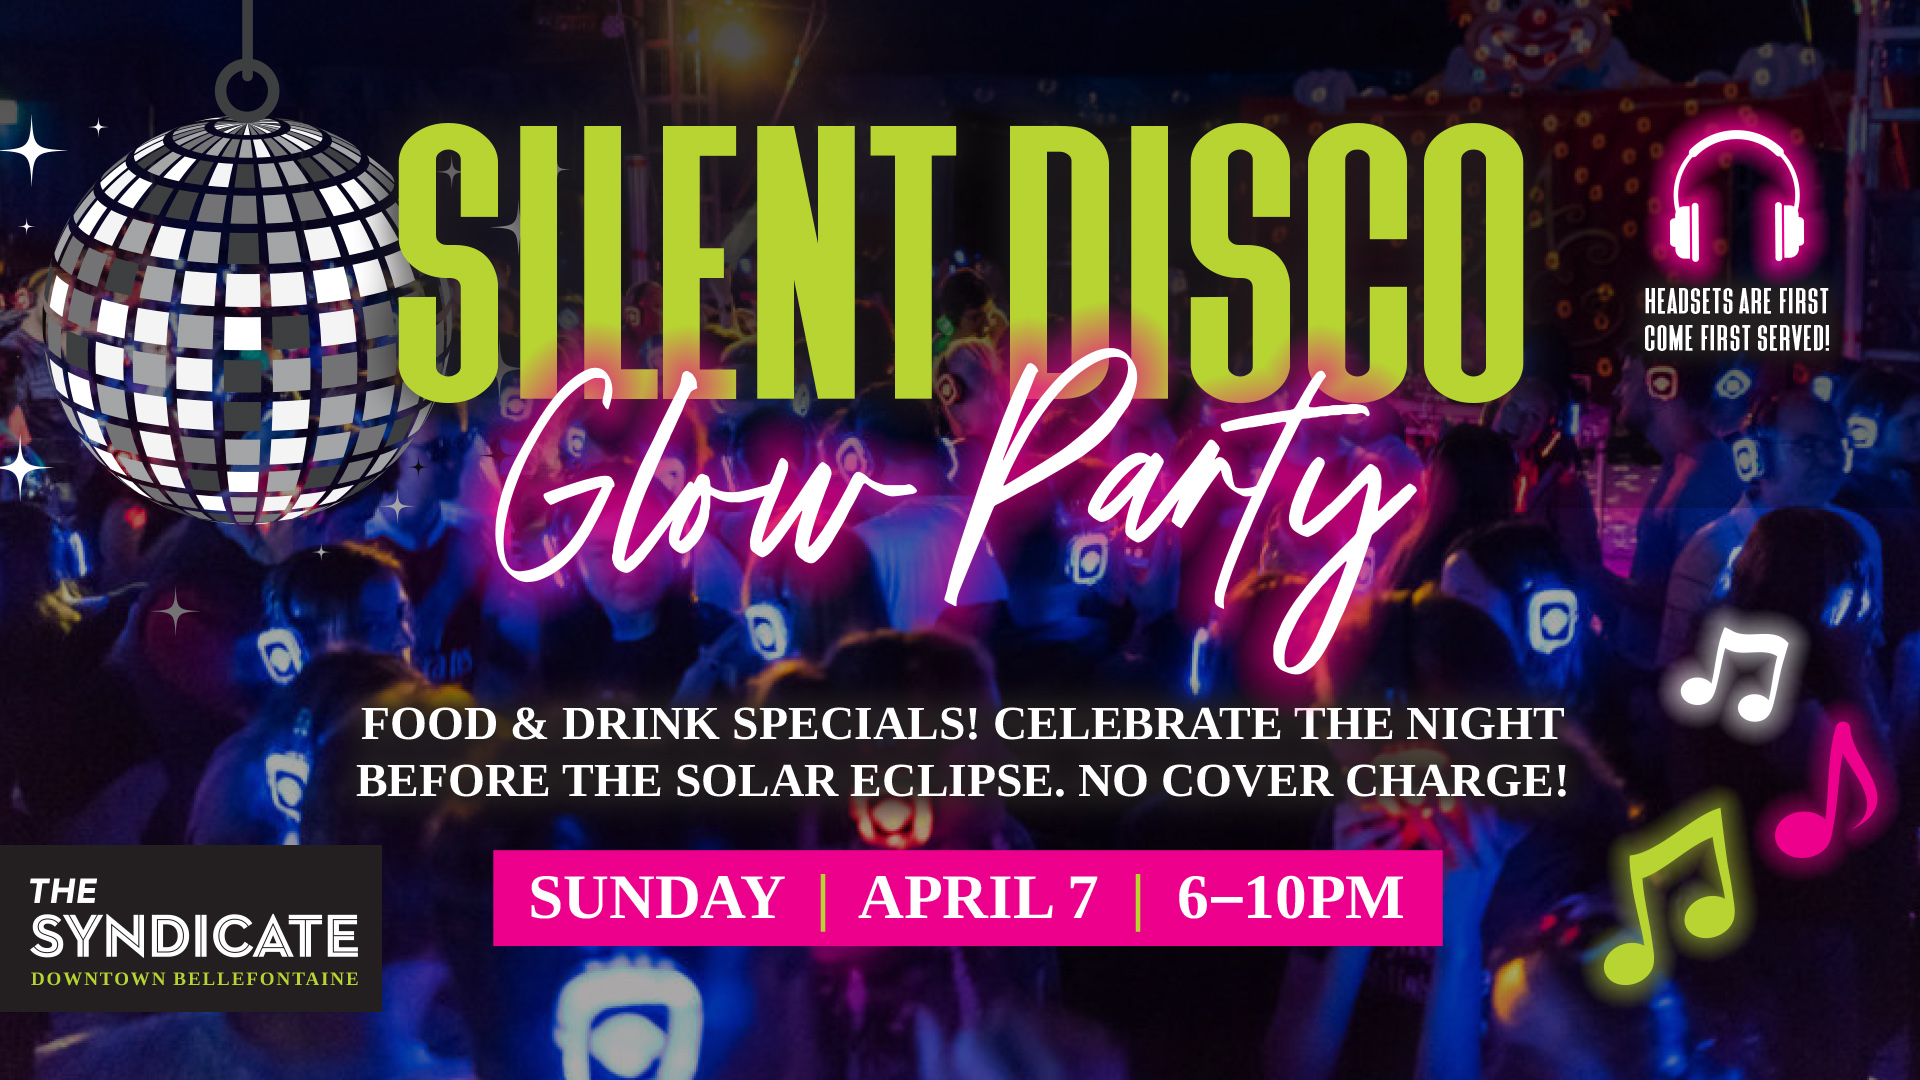 Silent Disco Glow Party